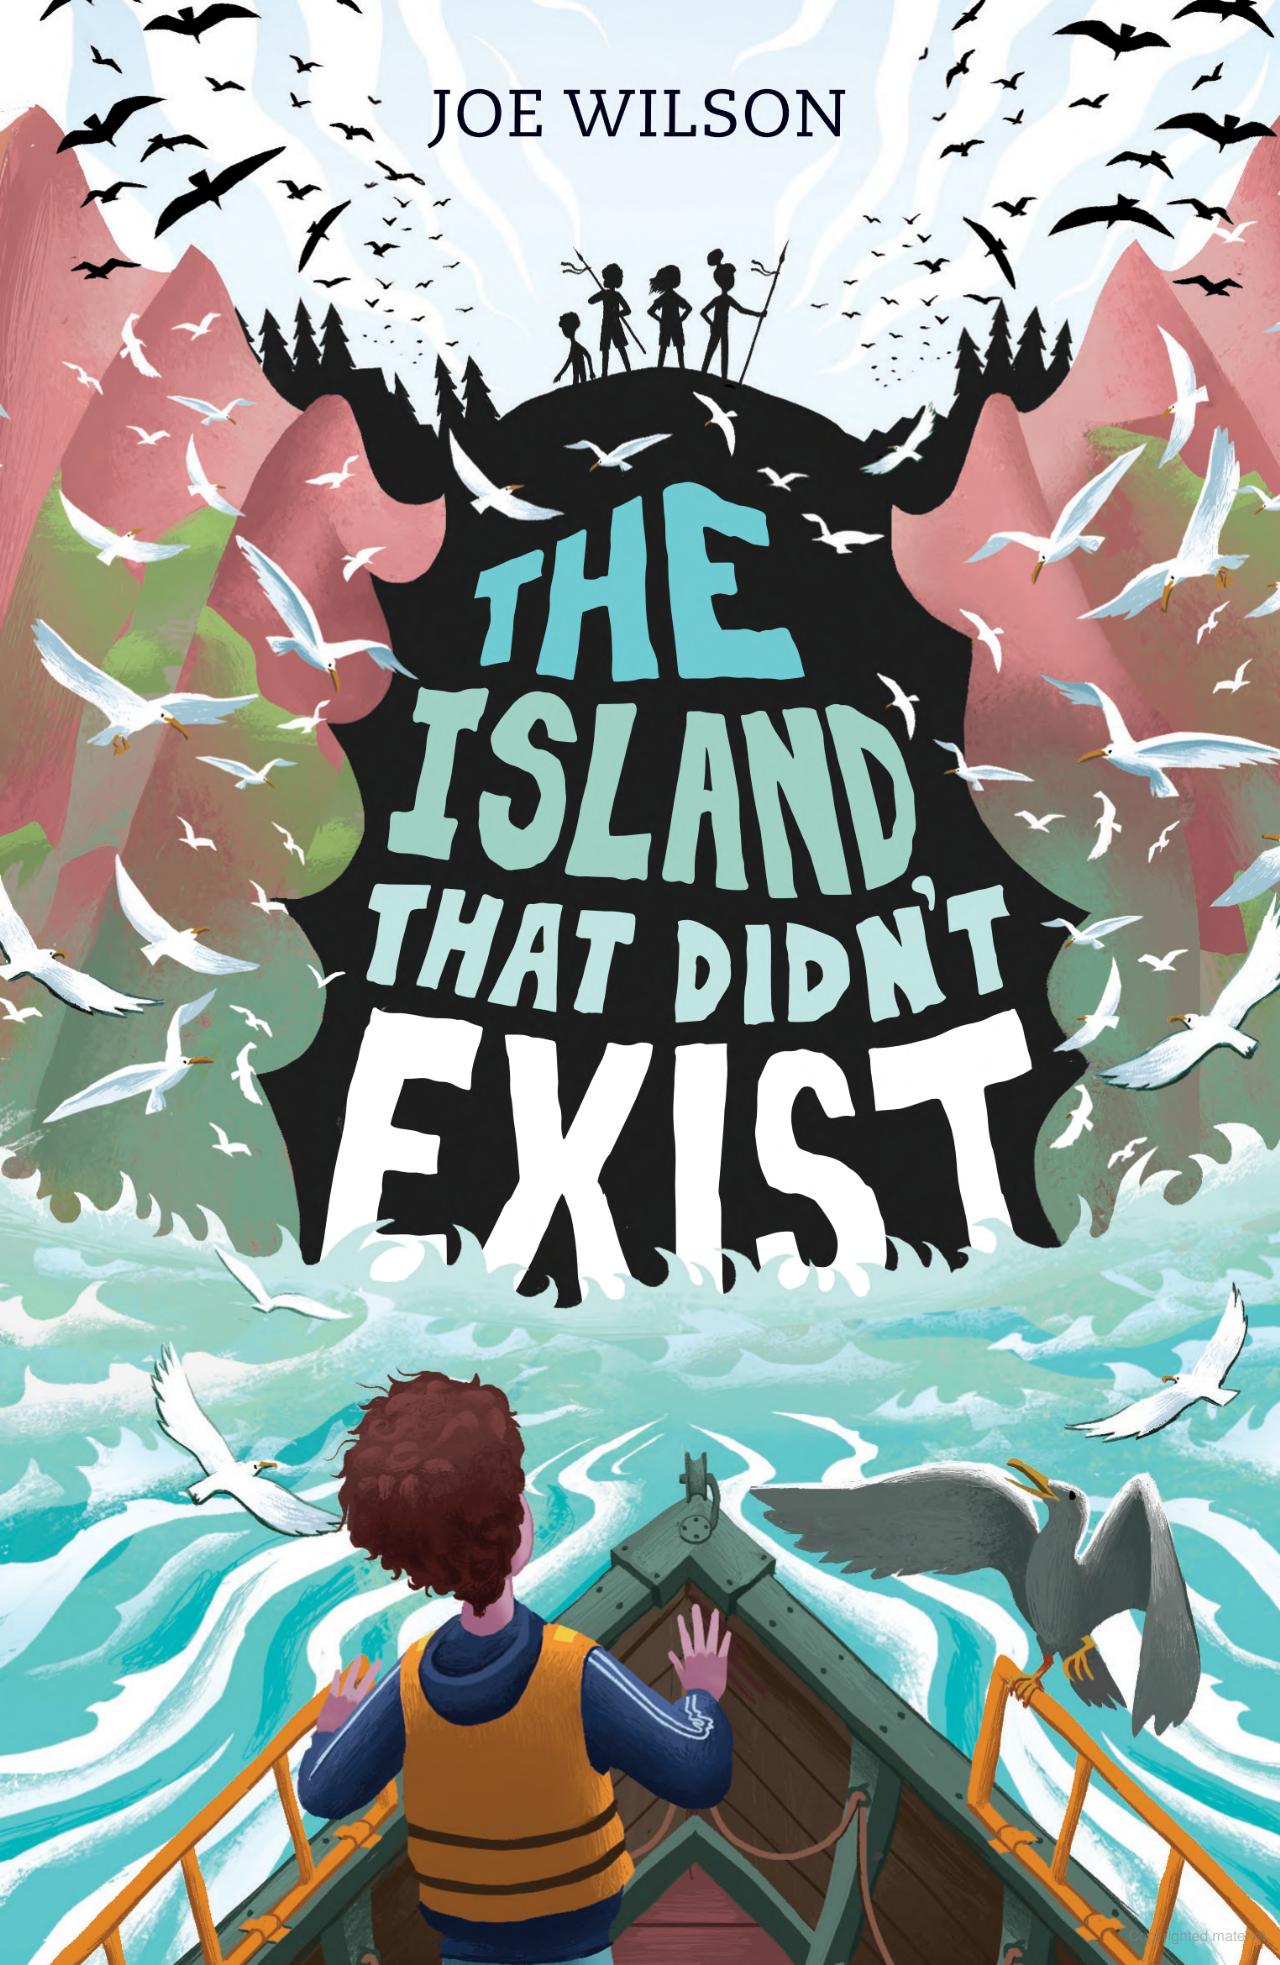 The Island That Didn't Exist by Joe Wilson